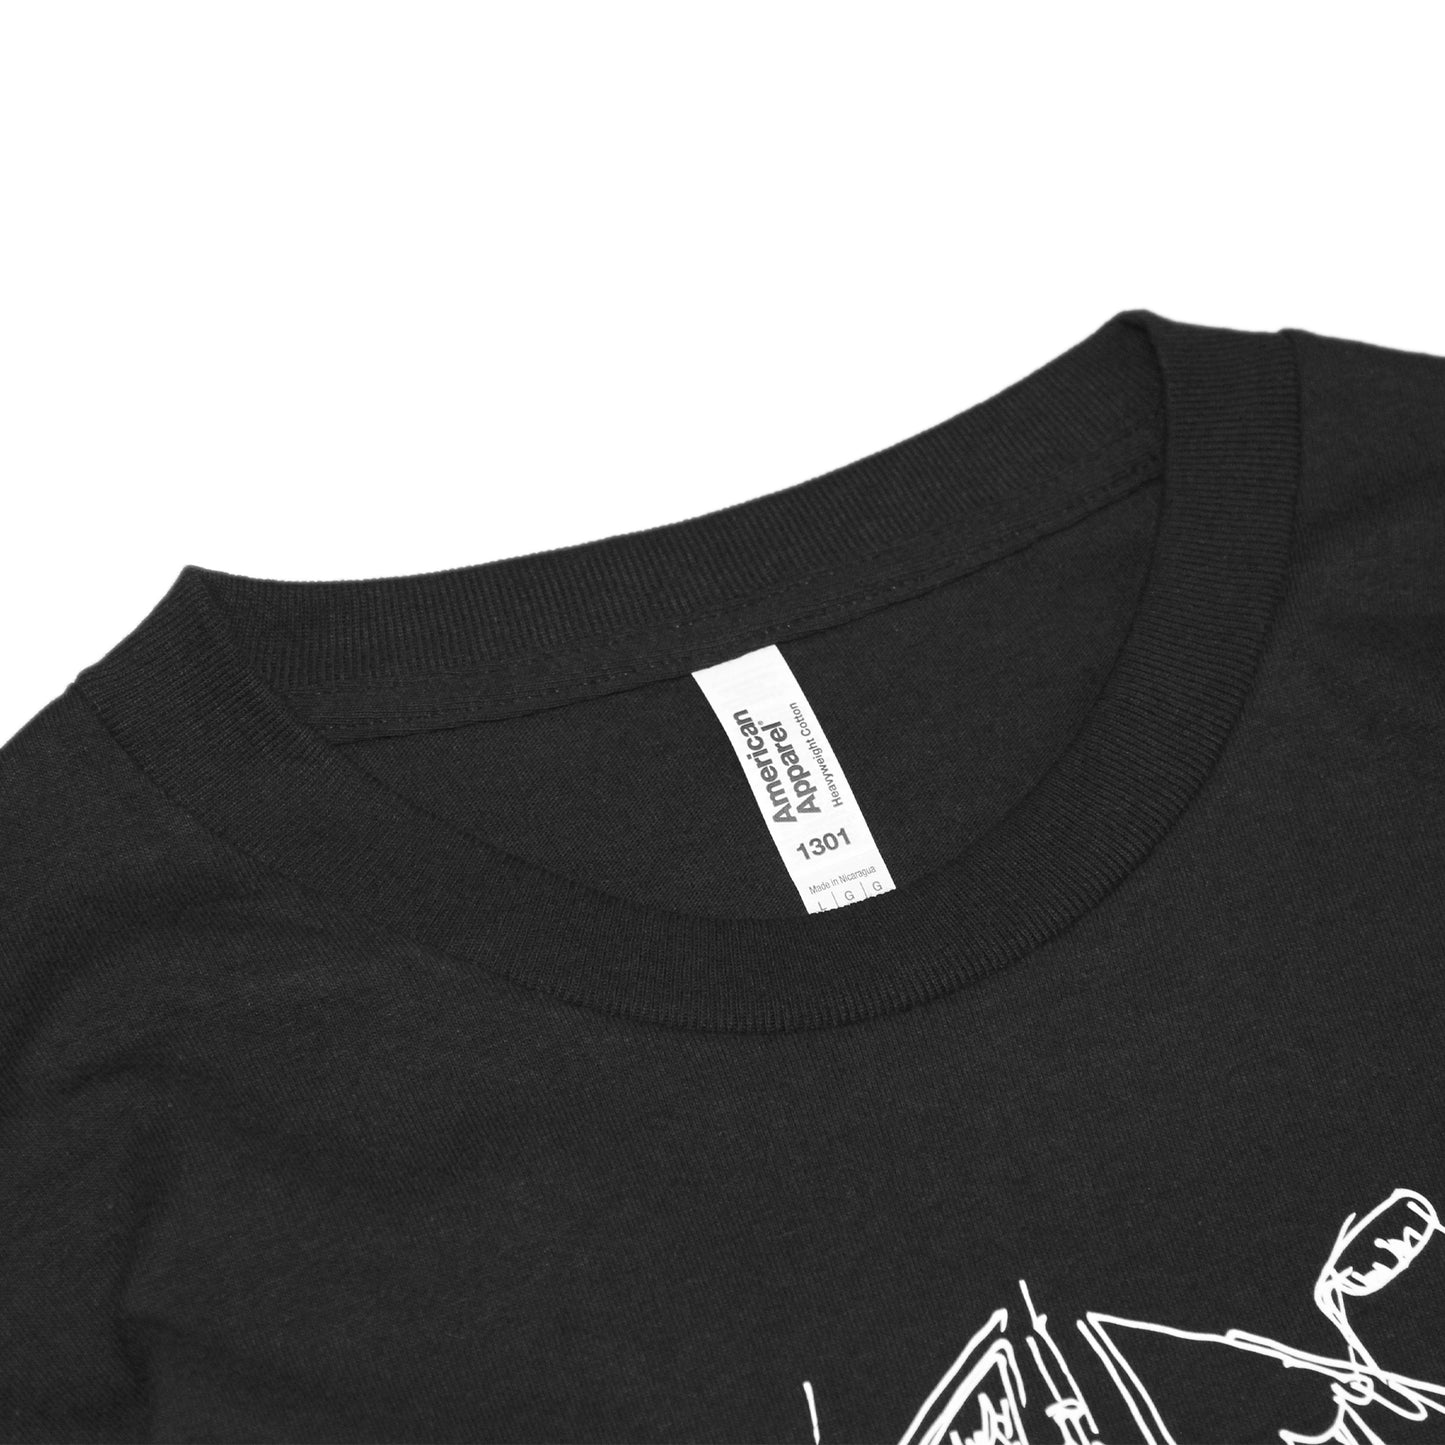 CELLADOORS - Blinkrflu1d T-Shirt/Black